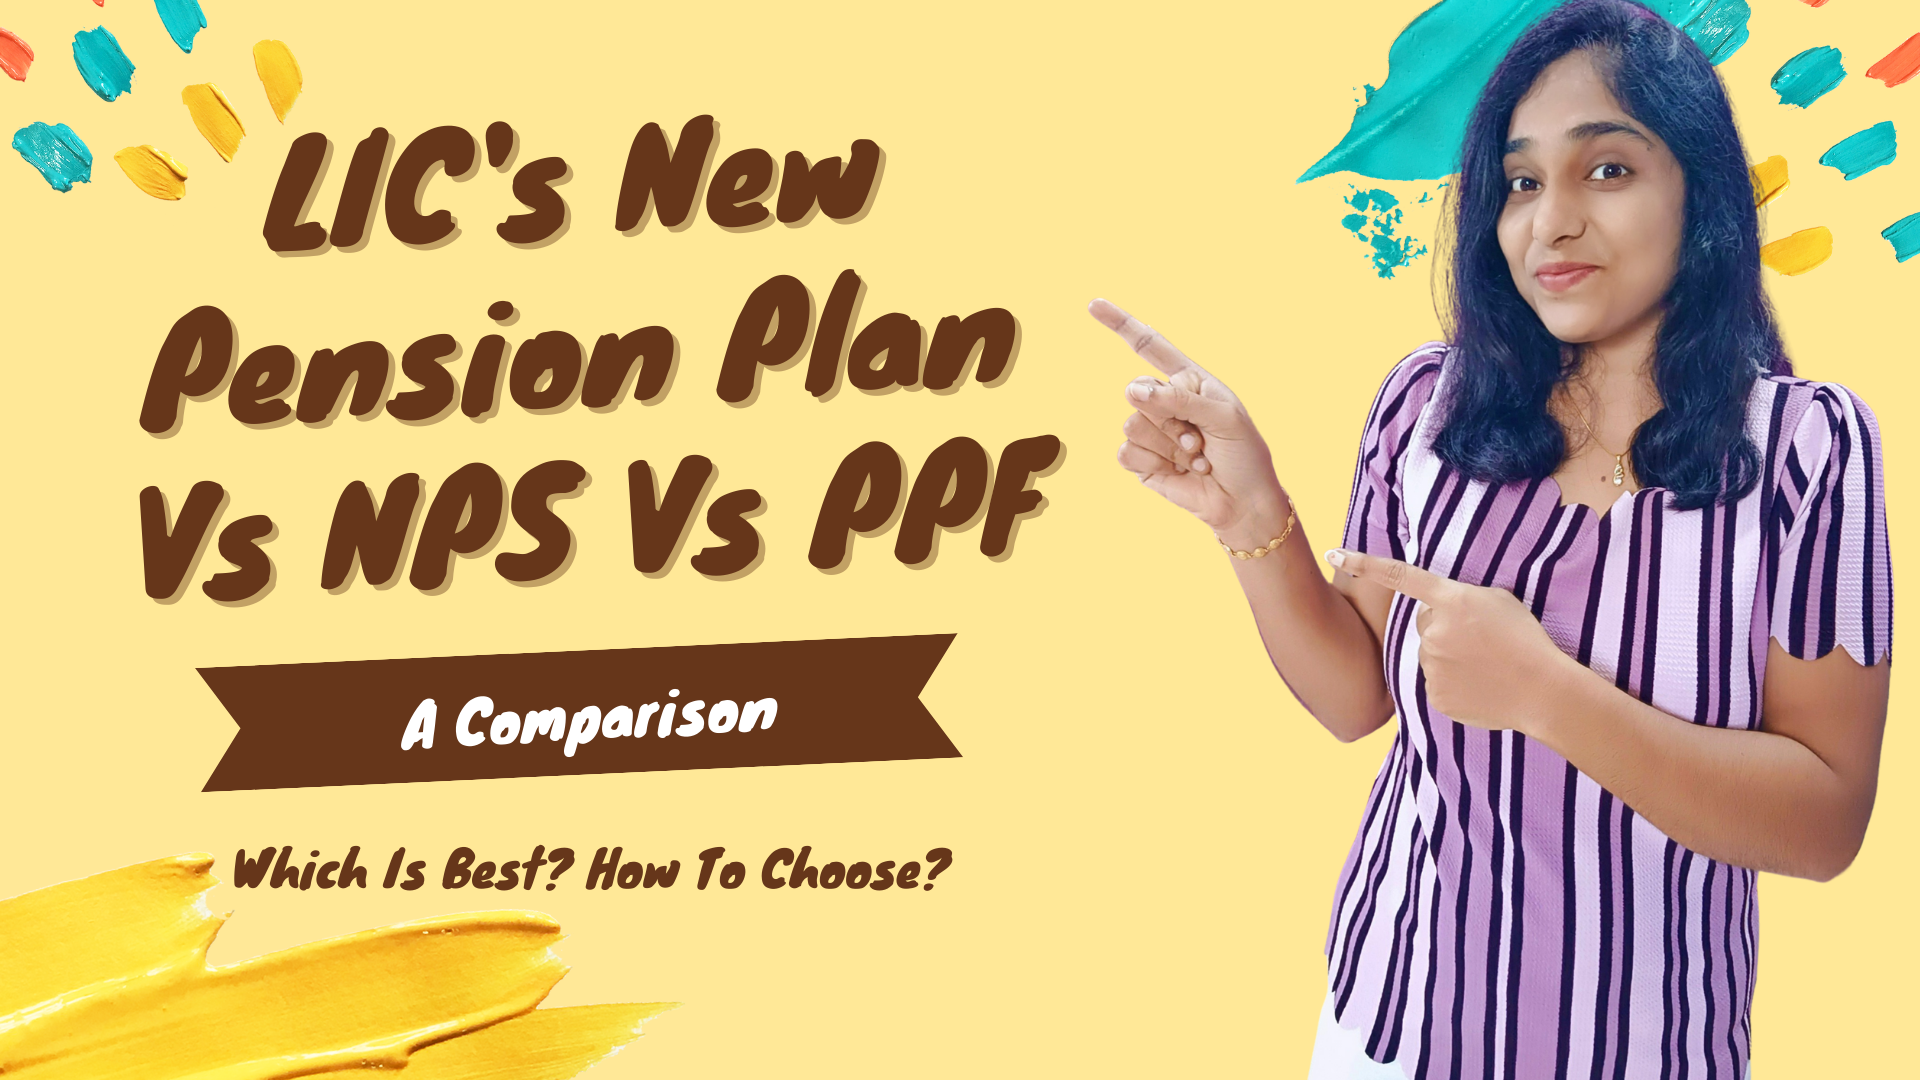 LIC's New Pension Plan Vs NPS Vs PPF